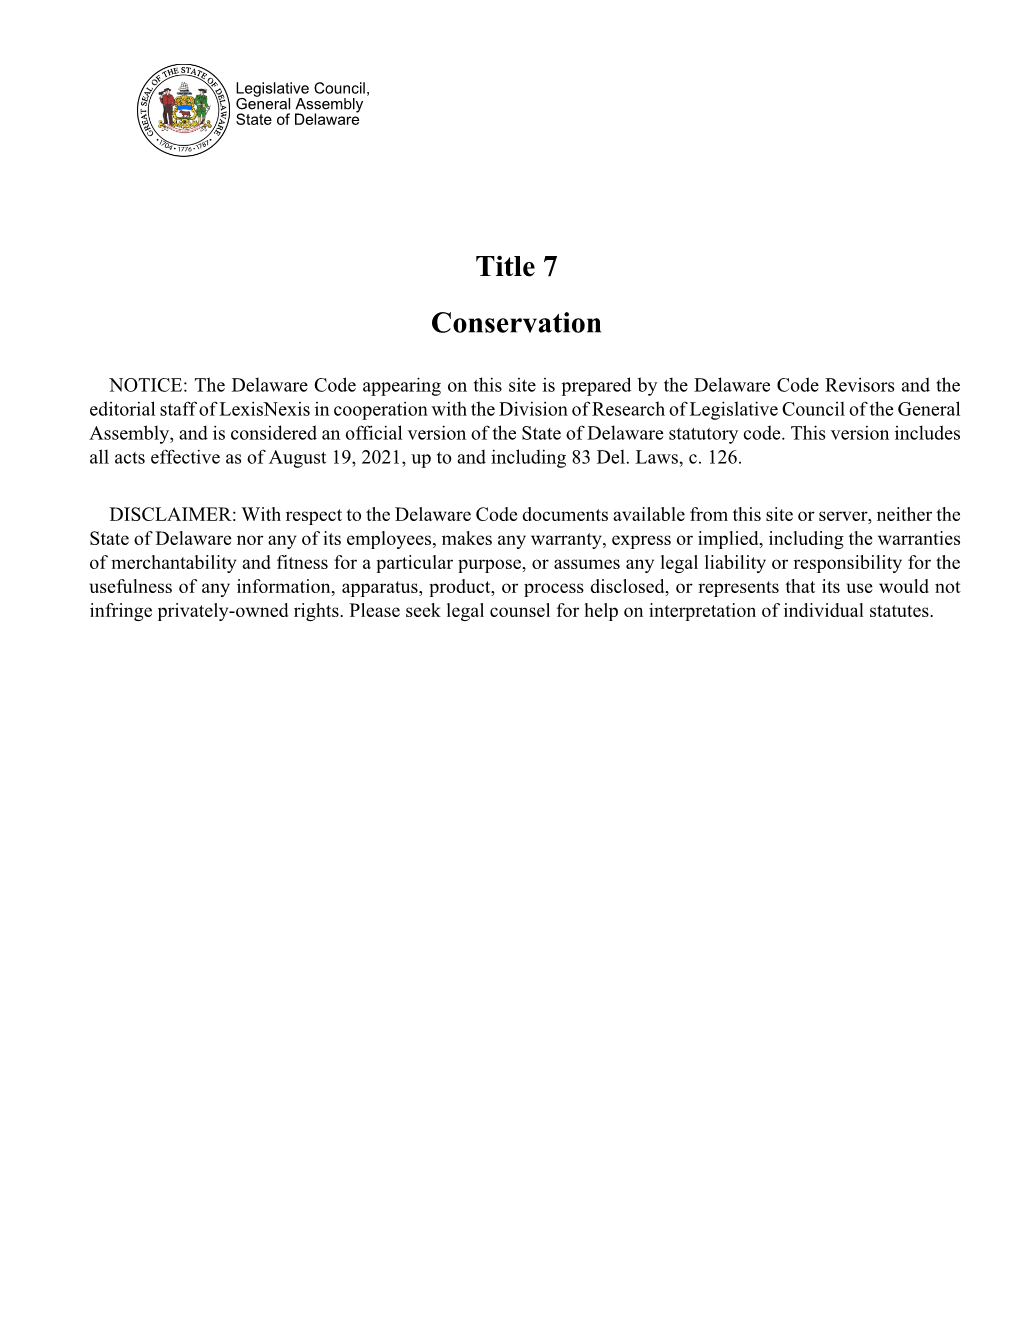 Title 7 Conservation